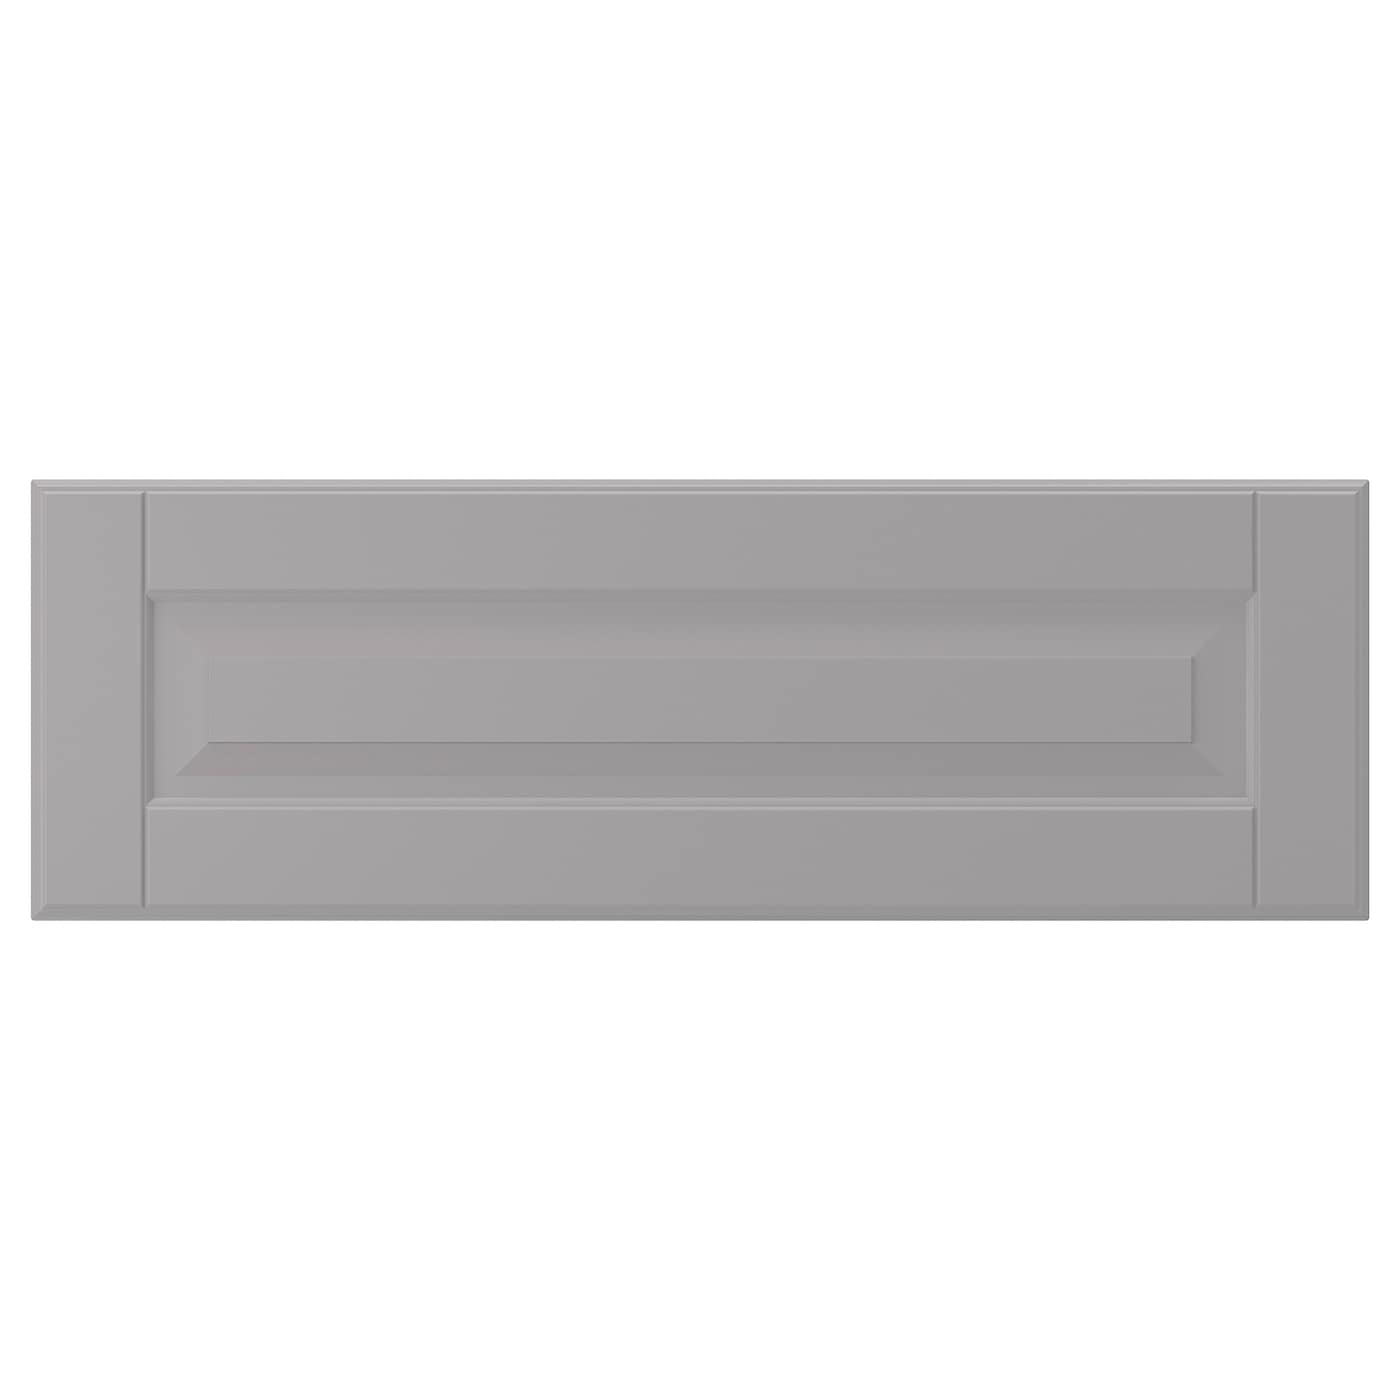 Фасад ящика - IKEA BODBYN, 20х60 см, серый, БУДБИН ИКЕА